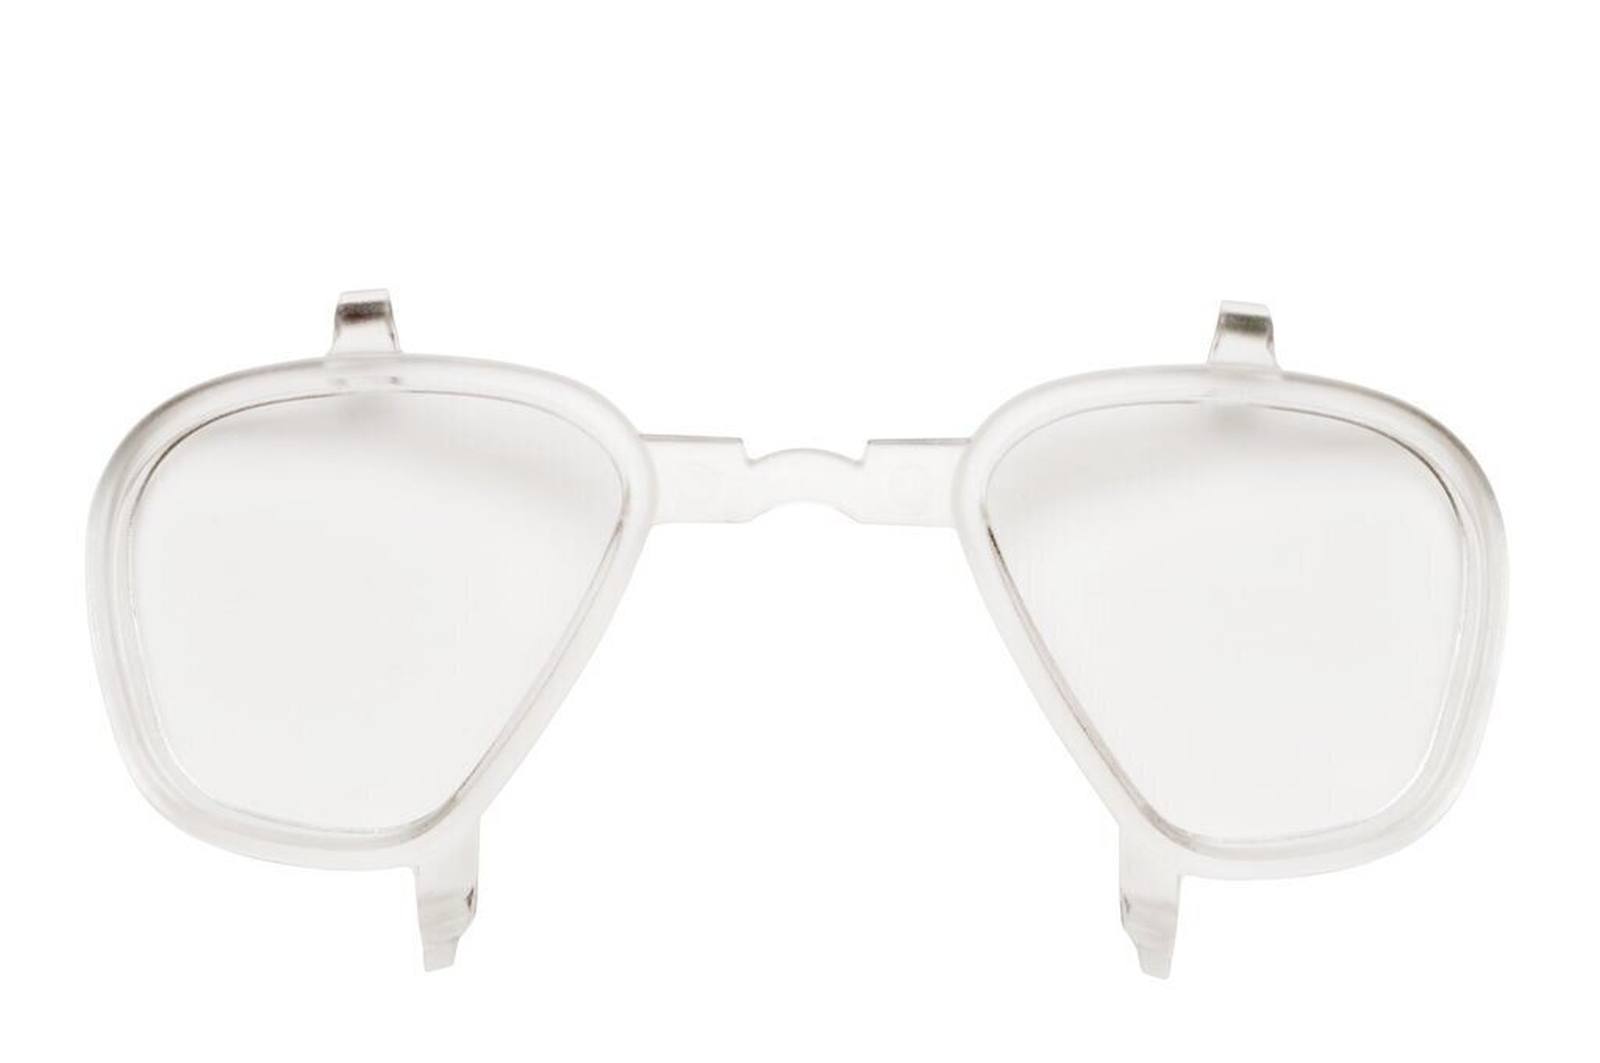 3M Korrektionsinsert für GoggleGear 500, Scotchgard Anti-Fog, UV, Vollsichtbrill GG500KI / GG500PI-EU